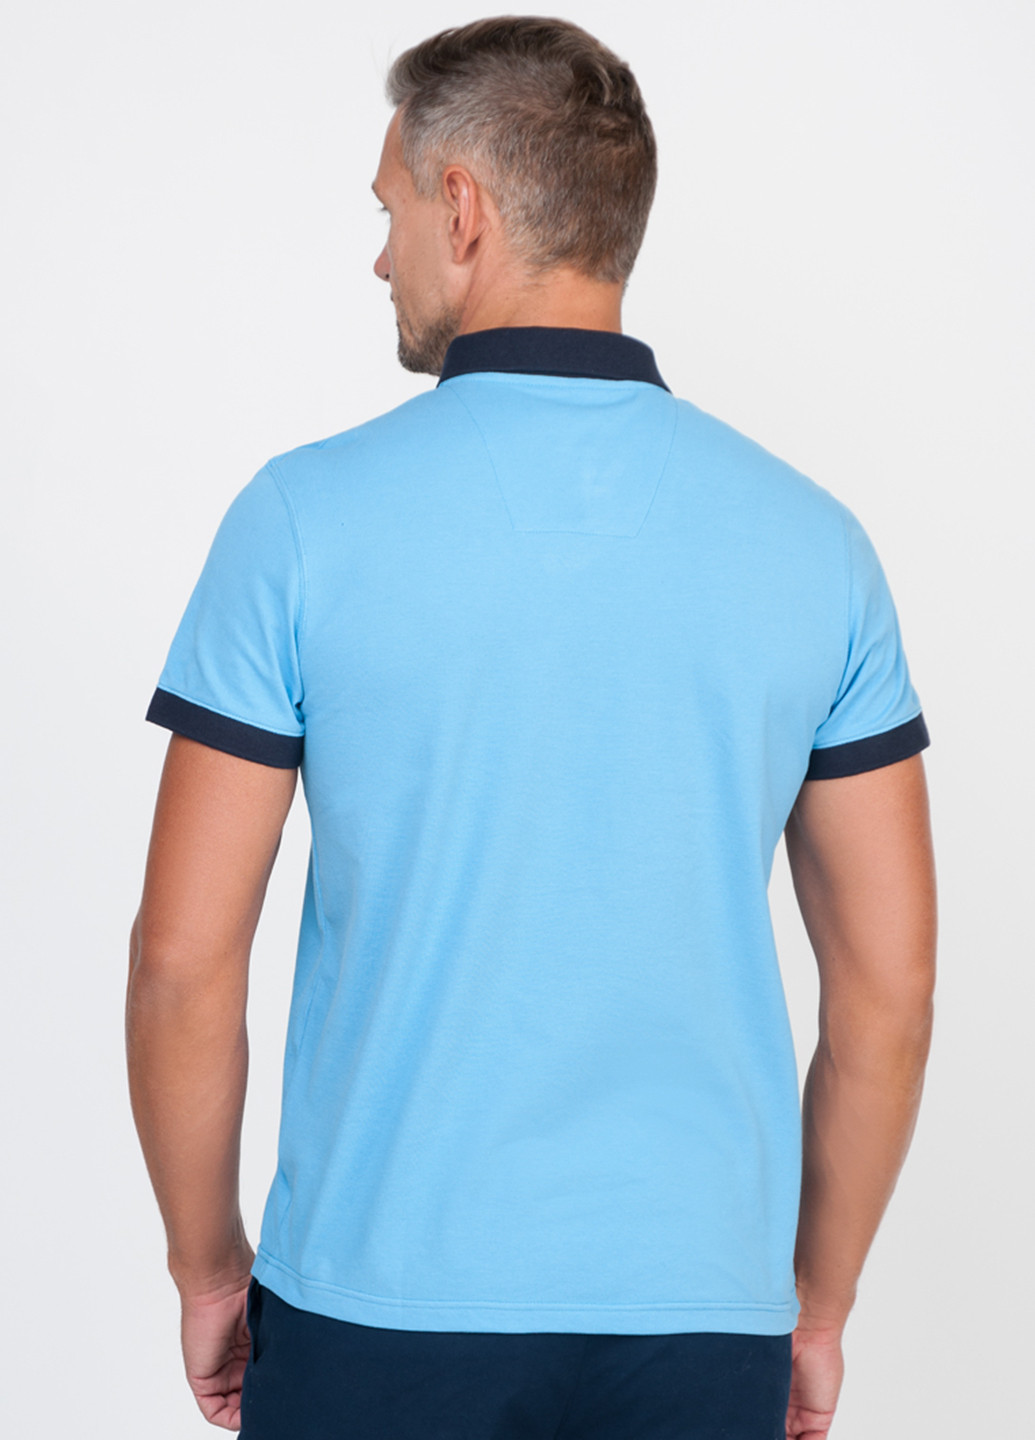 Голубой футболка-поло для мужчин Arber однотонная